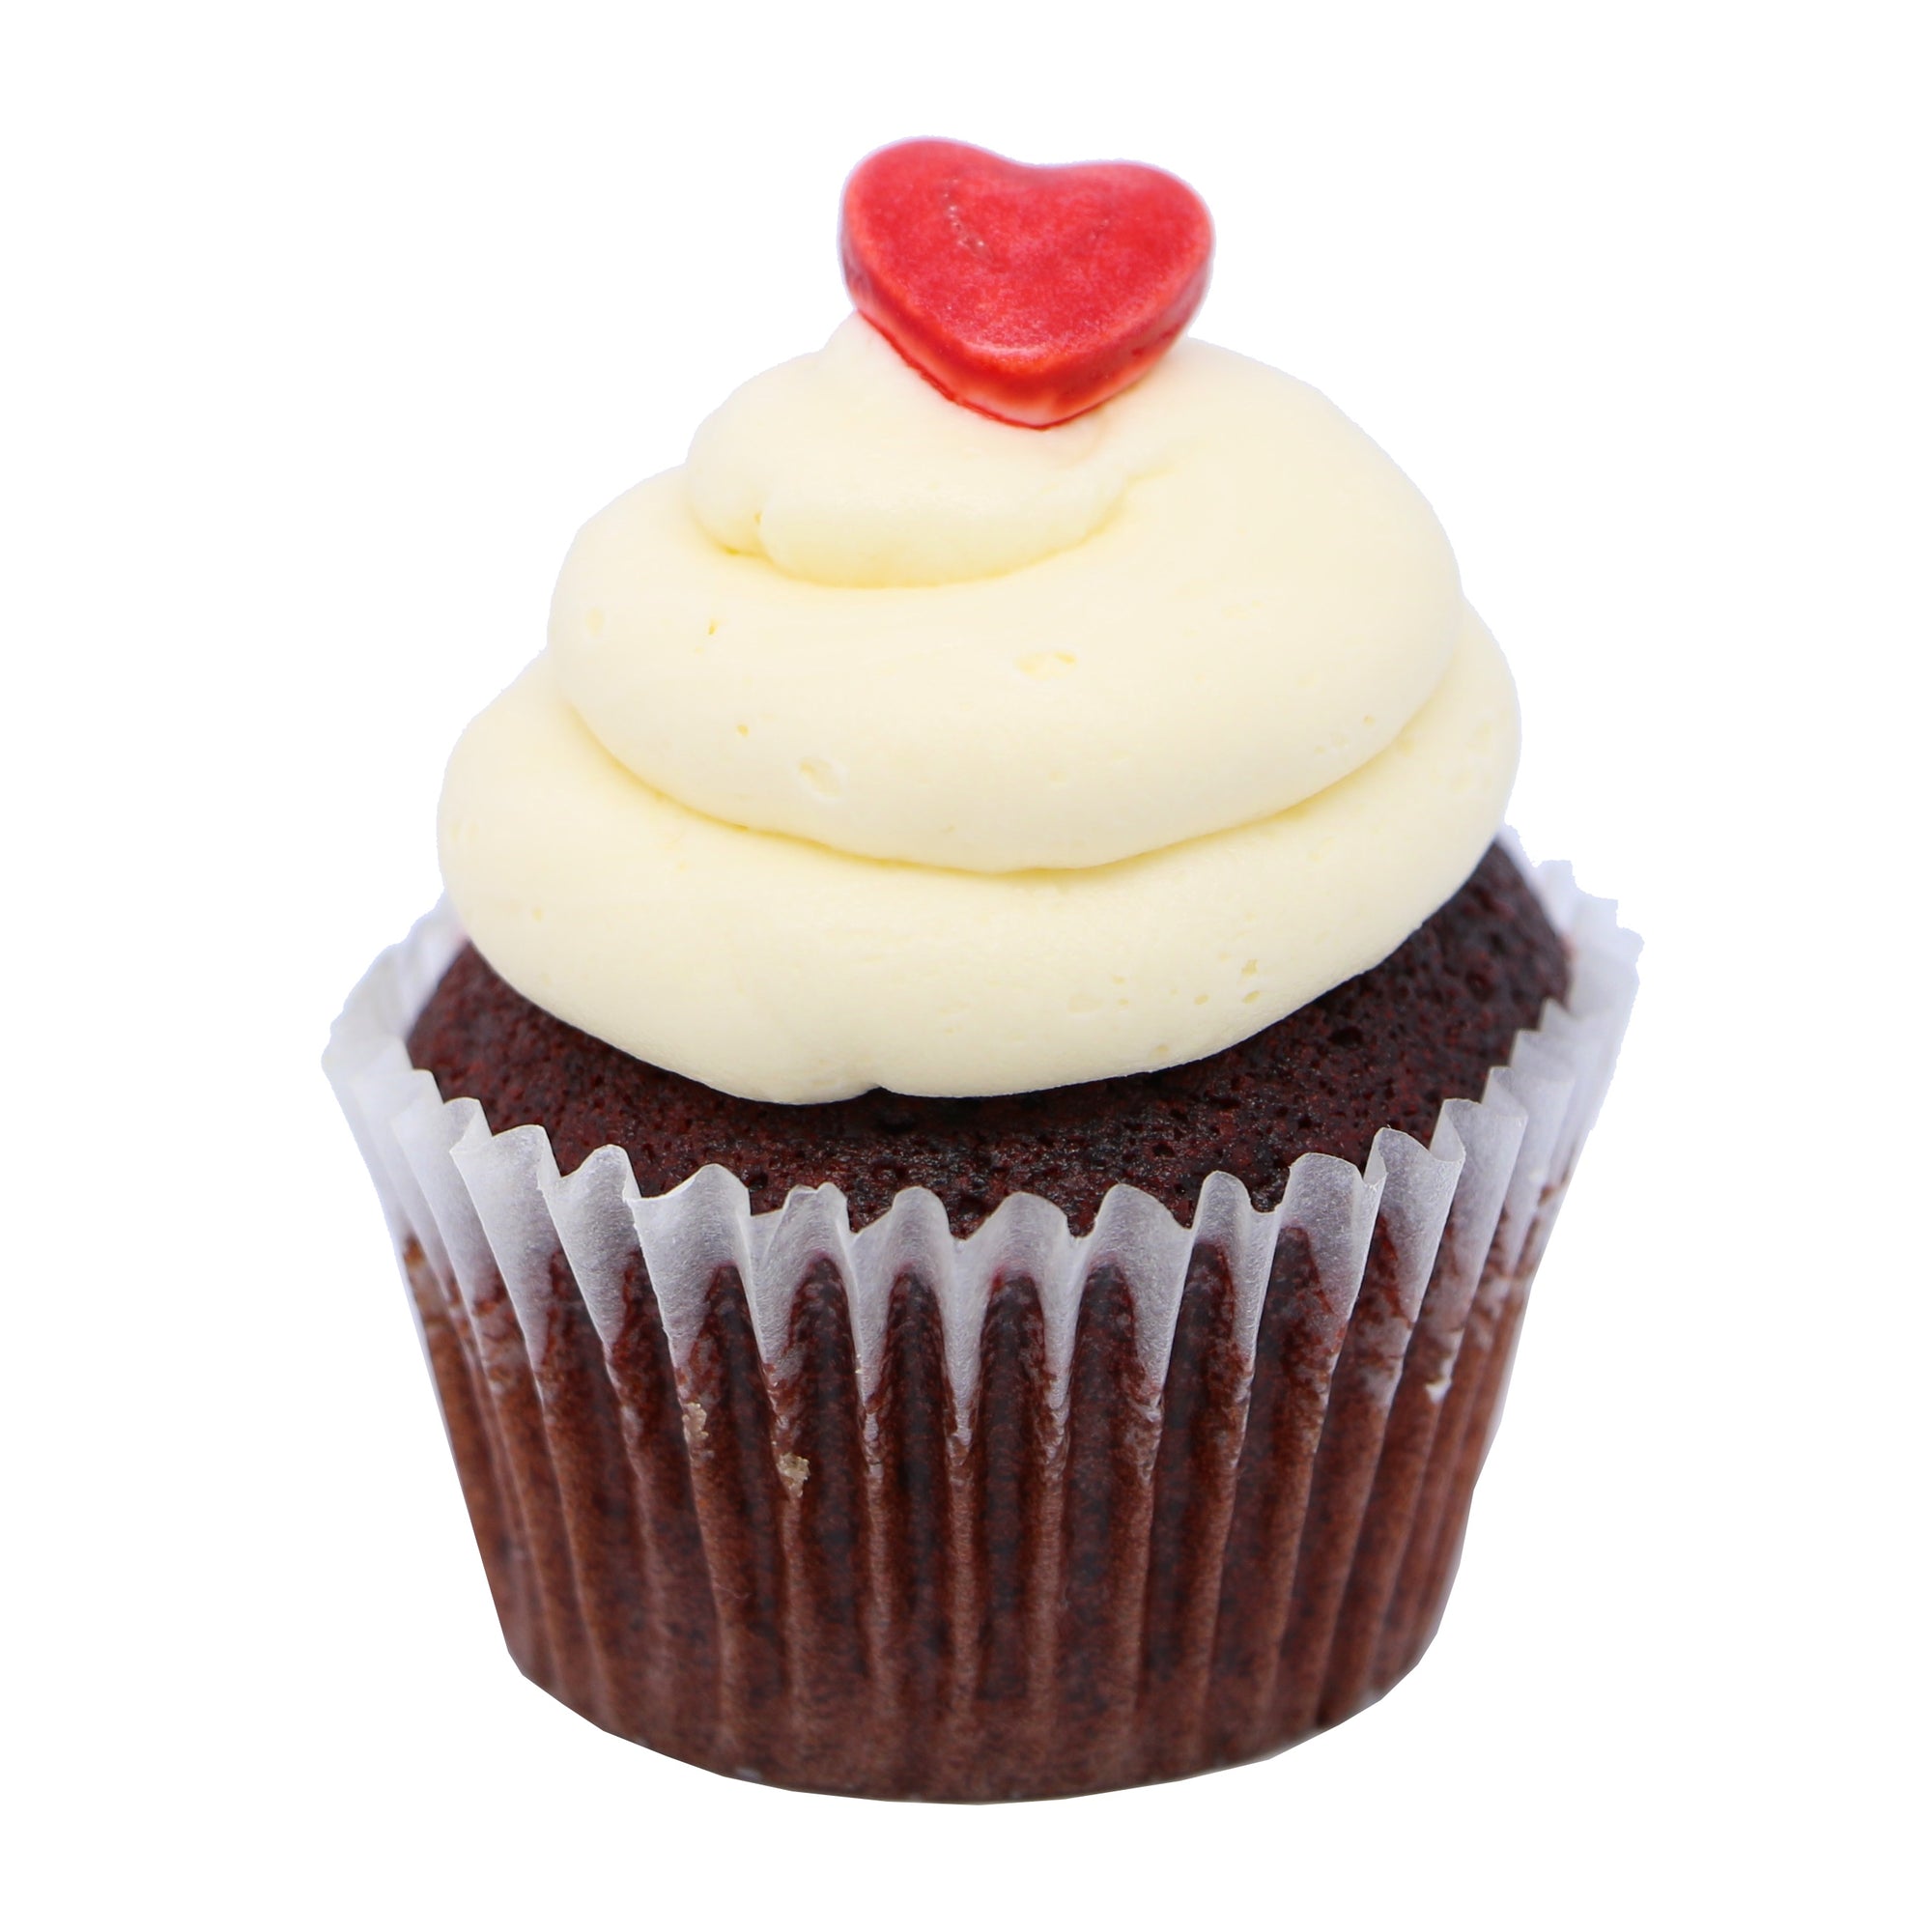 Mini Cupcake - Red Velvet - Treats2eat - Wedding & Birthday Party Dessert Catering Near Me